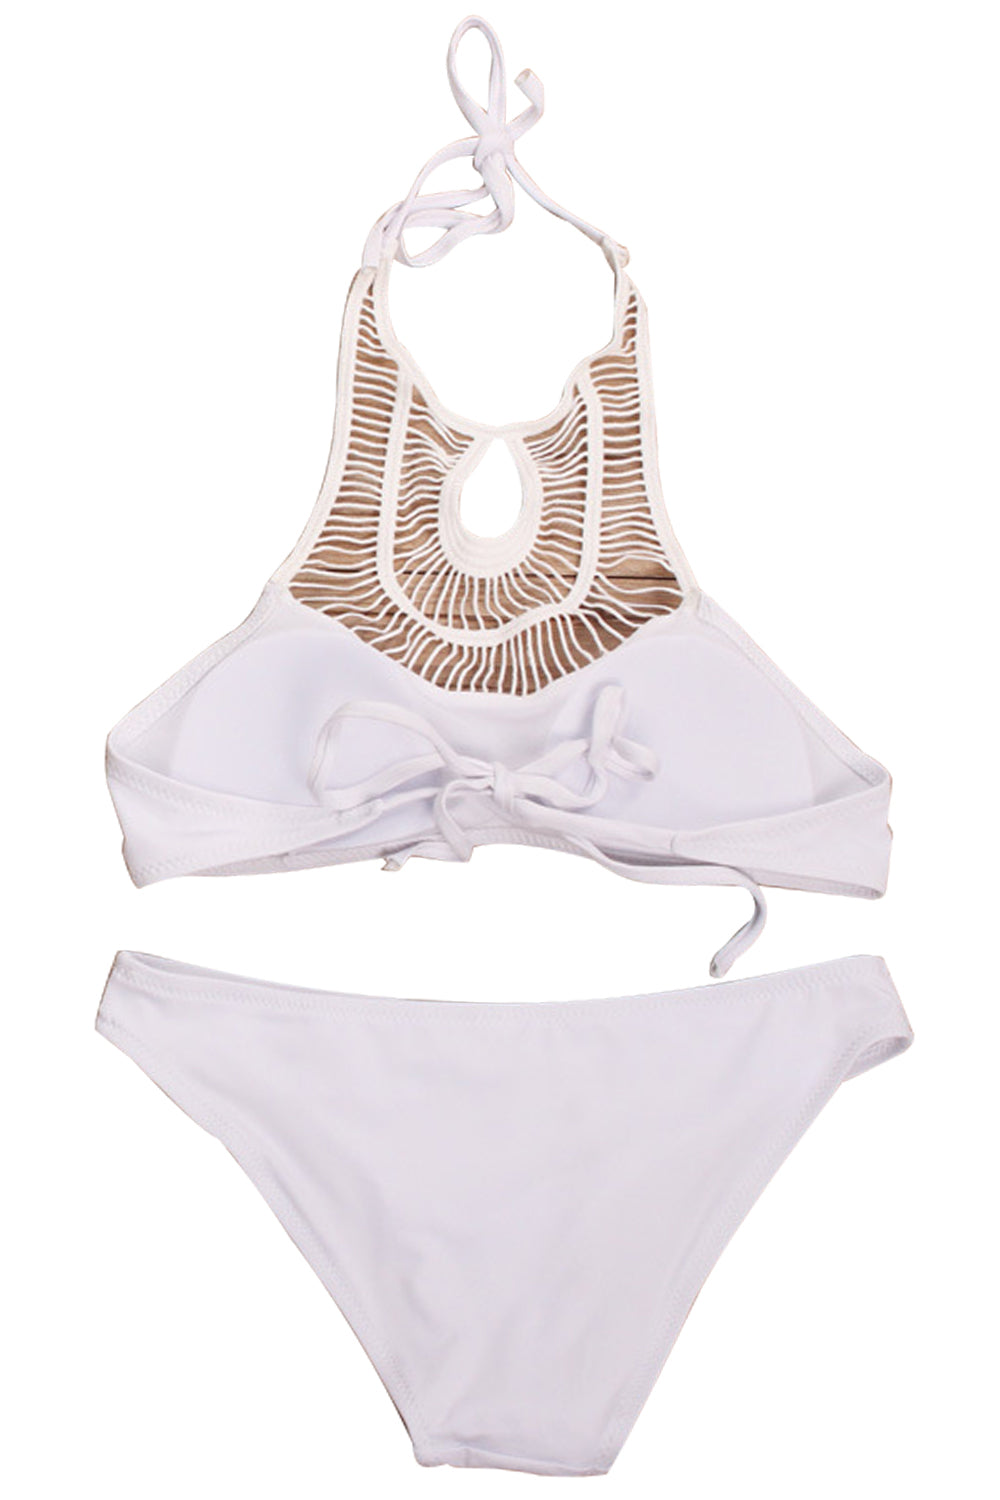 Iyasson Leaves Printing Trendy High neck Bikini Set